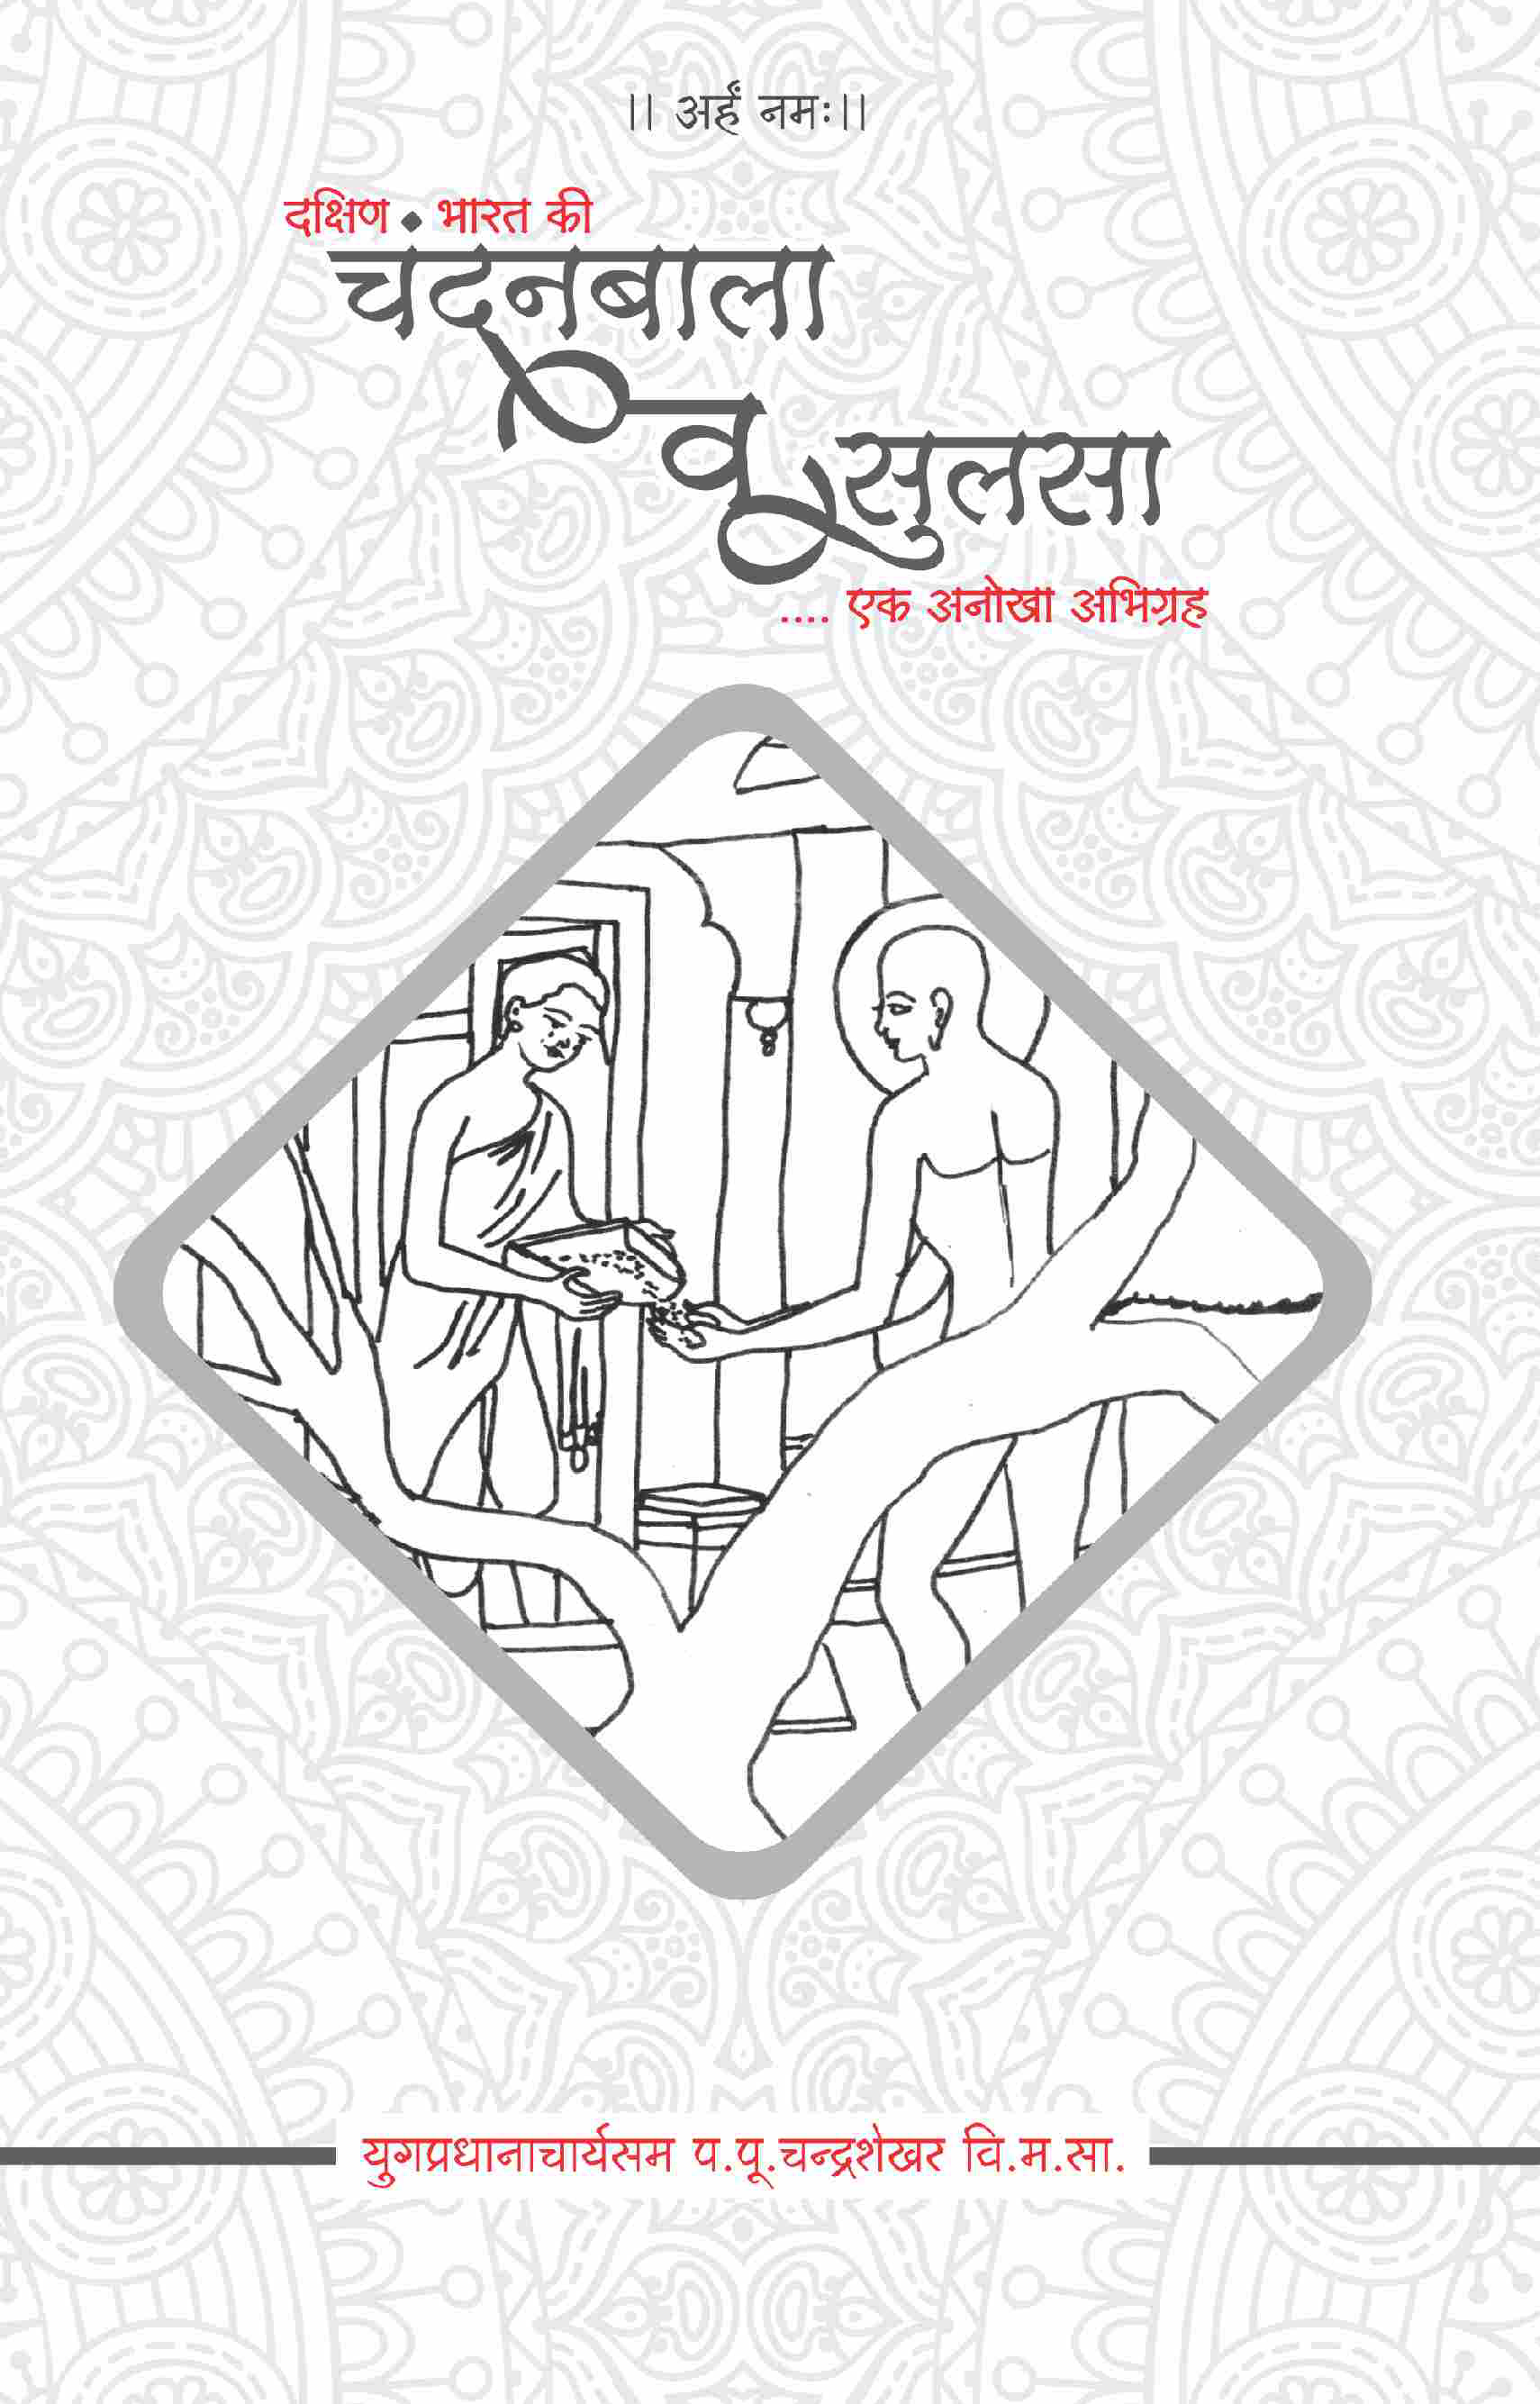 Chandanbala,sulsa,janisambook,hindi jain books,chandanbala book,book on chandanbala,book on sulsa,sulsa book